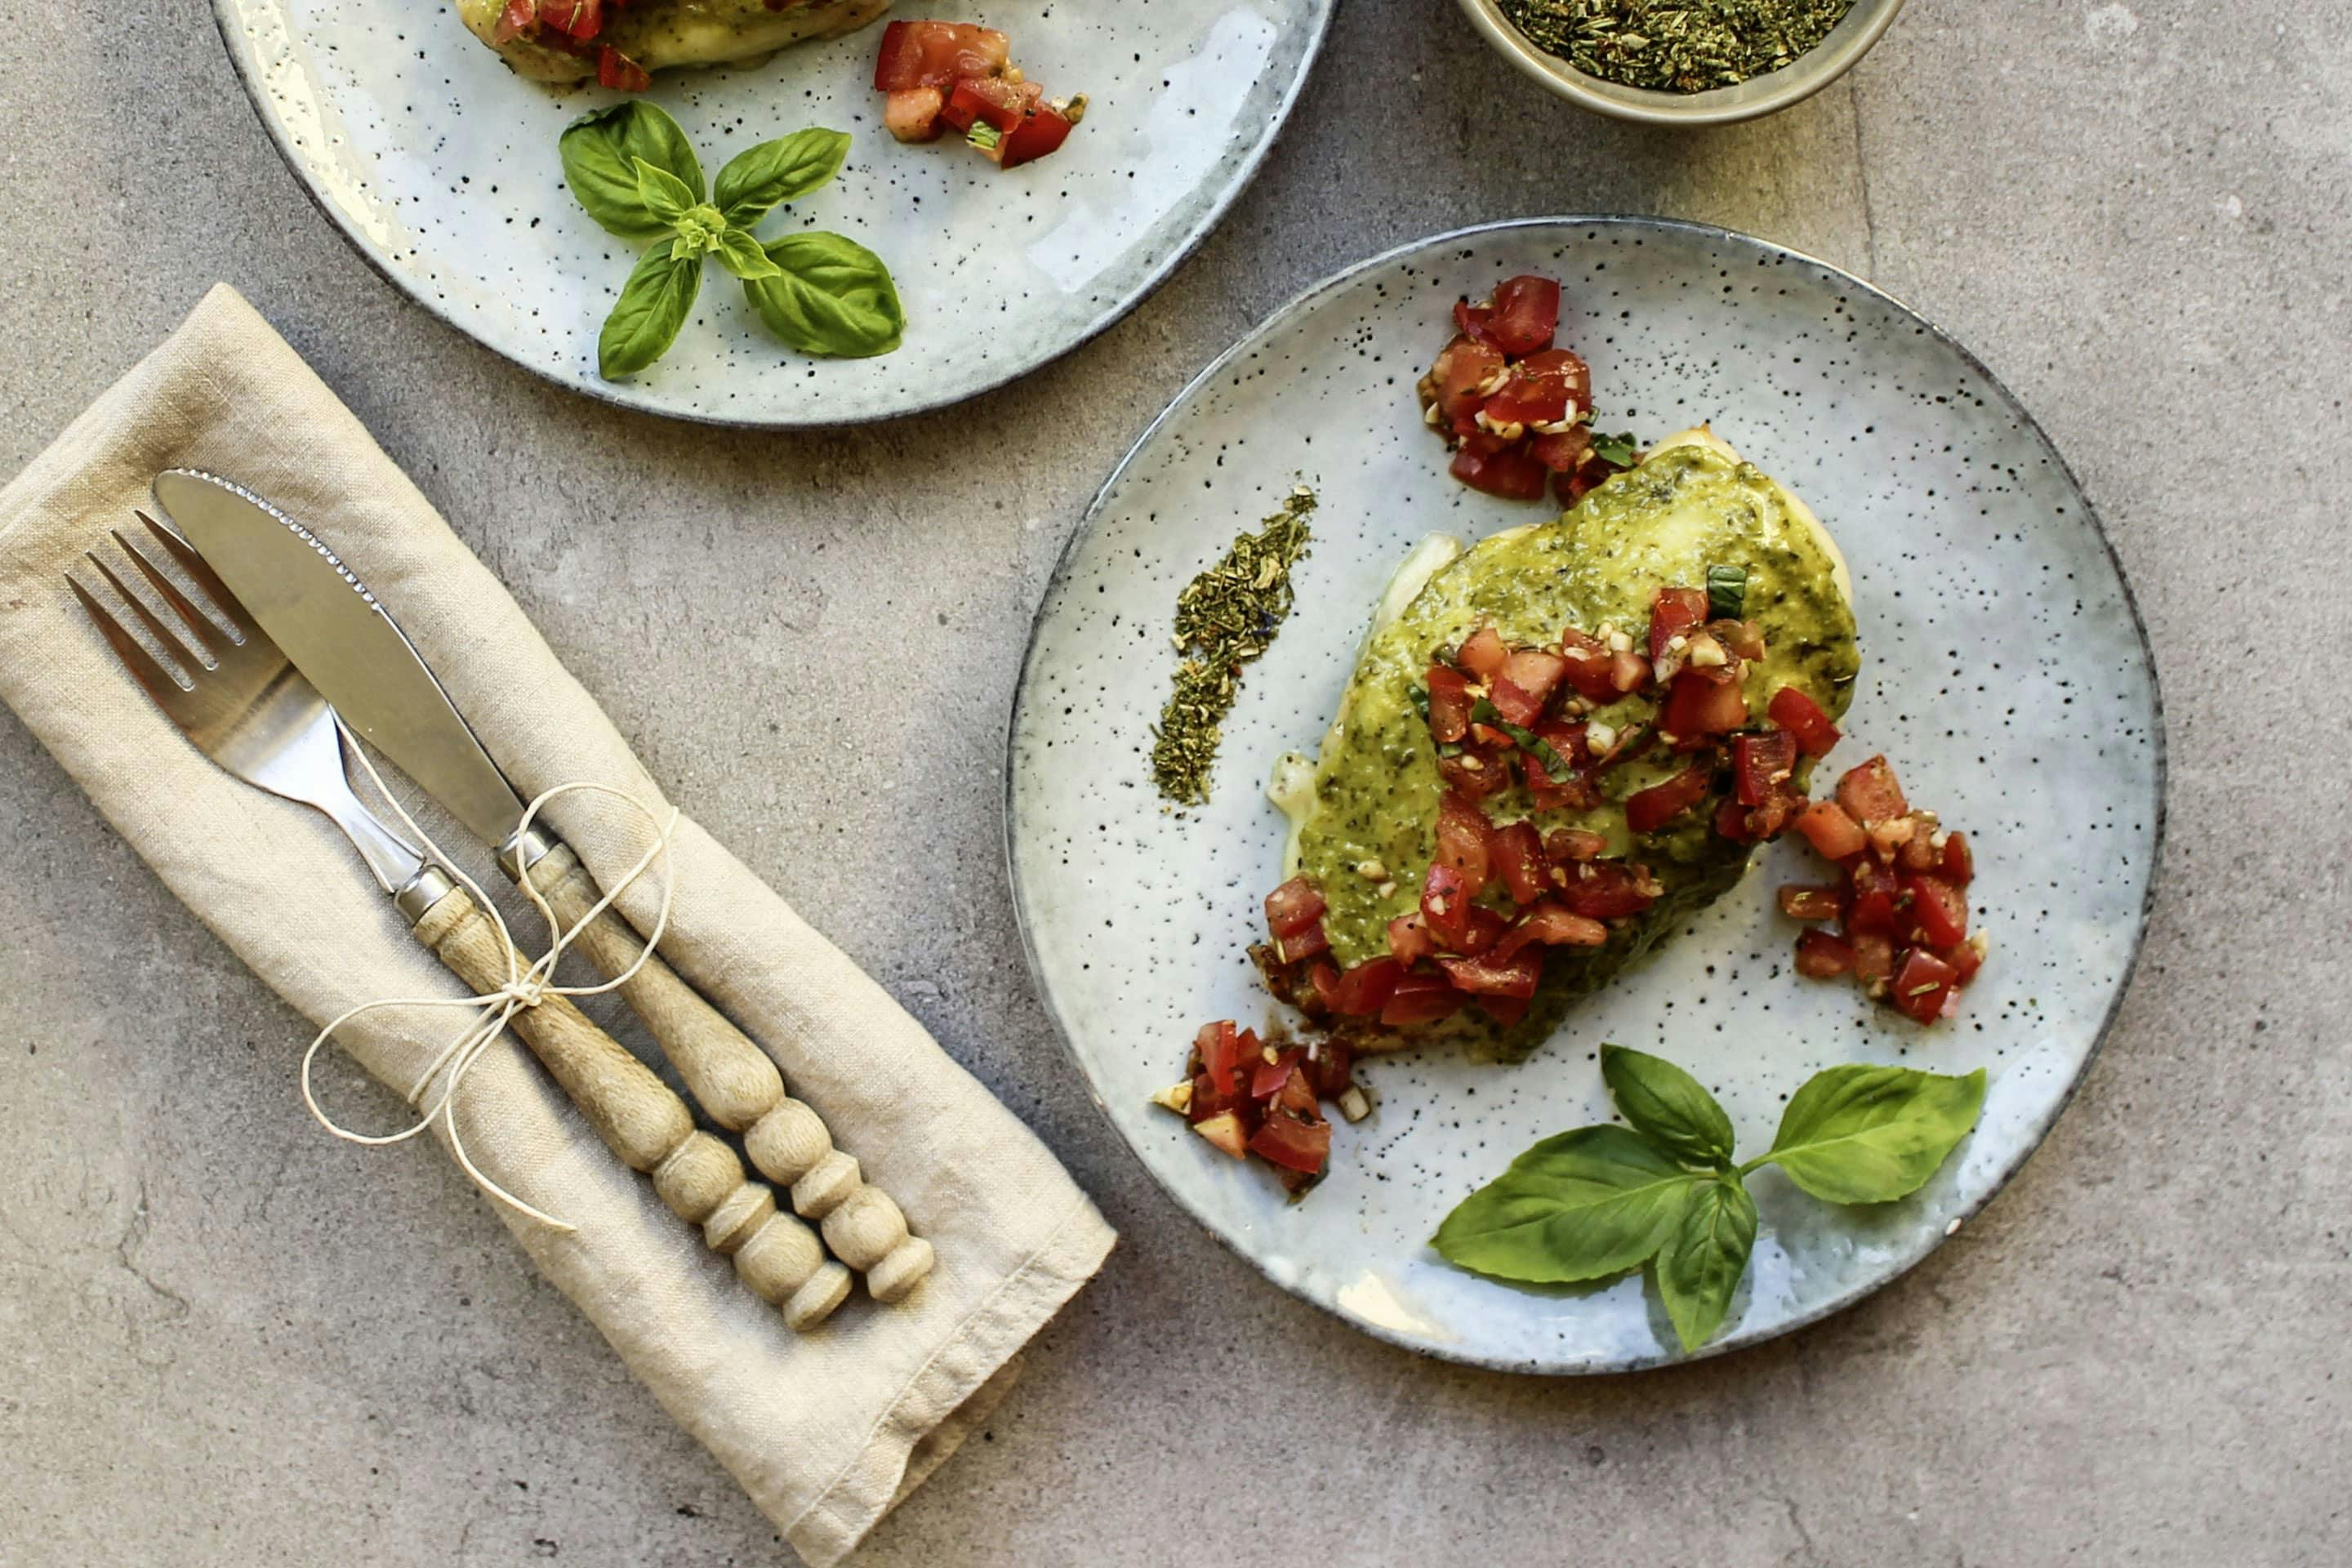 Chicken bruschetta with Tuscany herbs